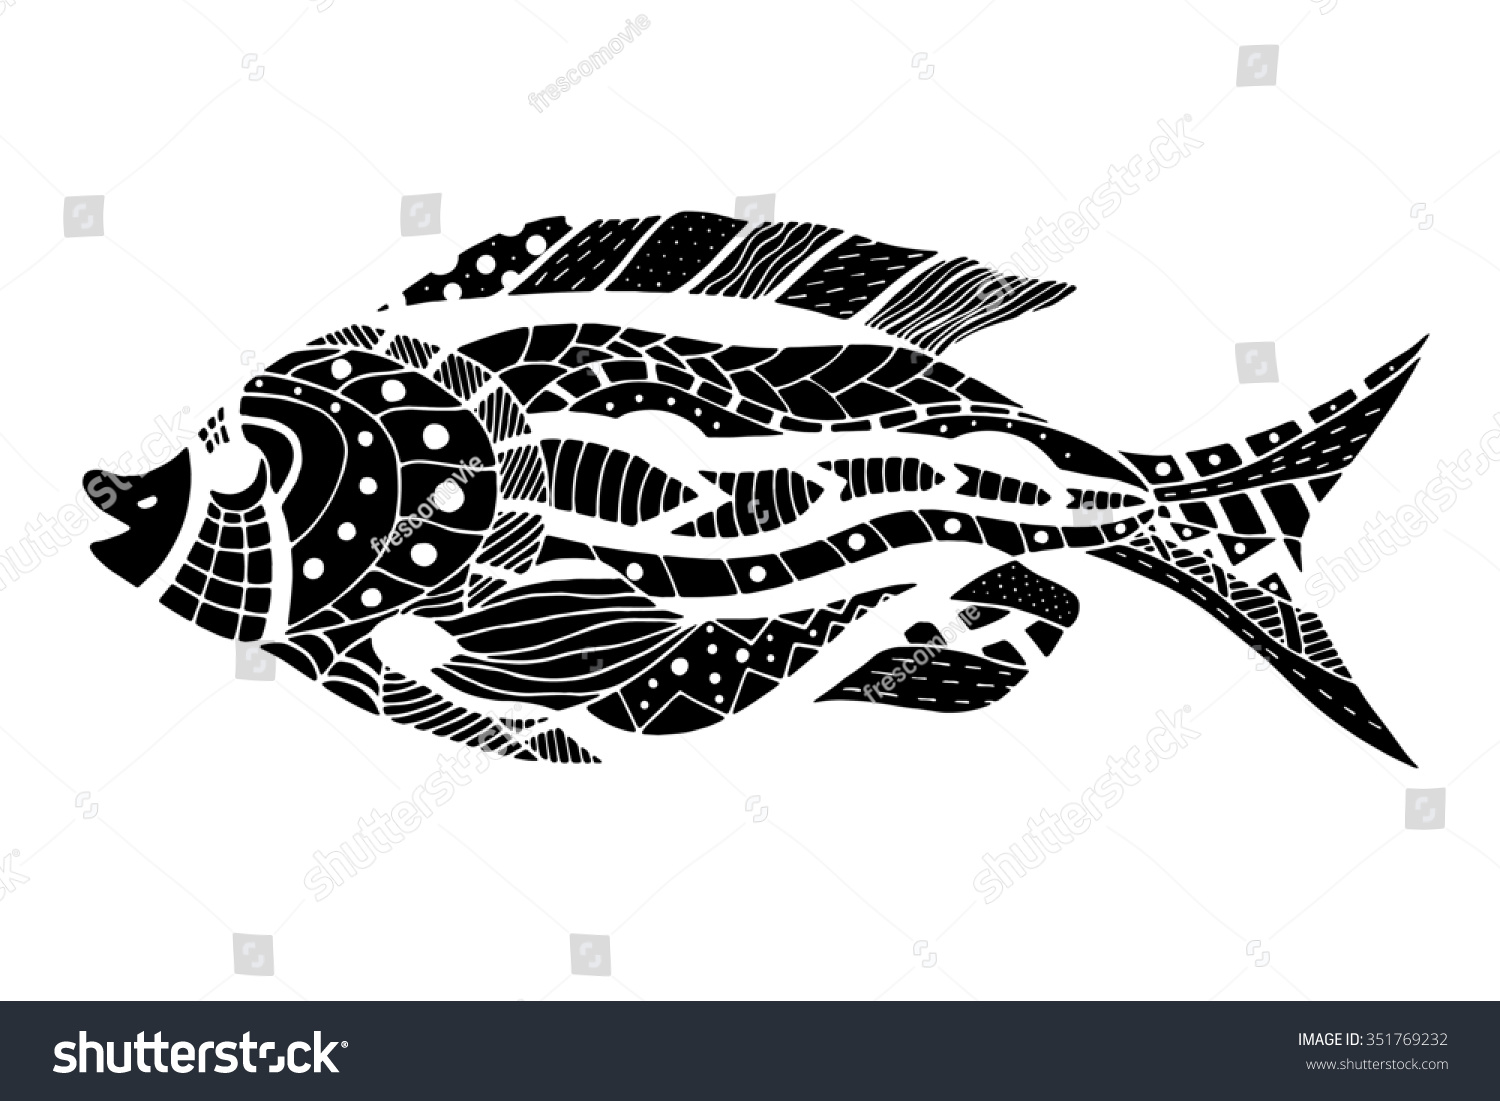 Royalty Free Monochrome Zentangle Stylized Fish 351769232 Stock